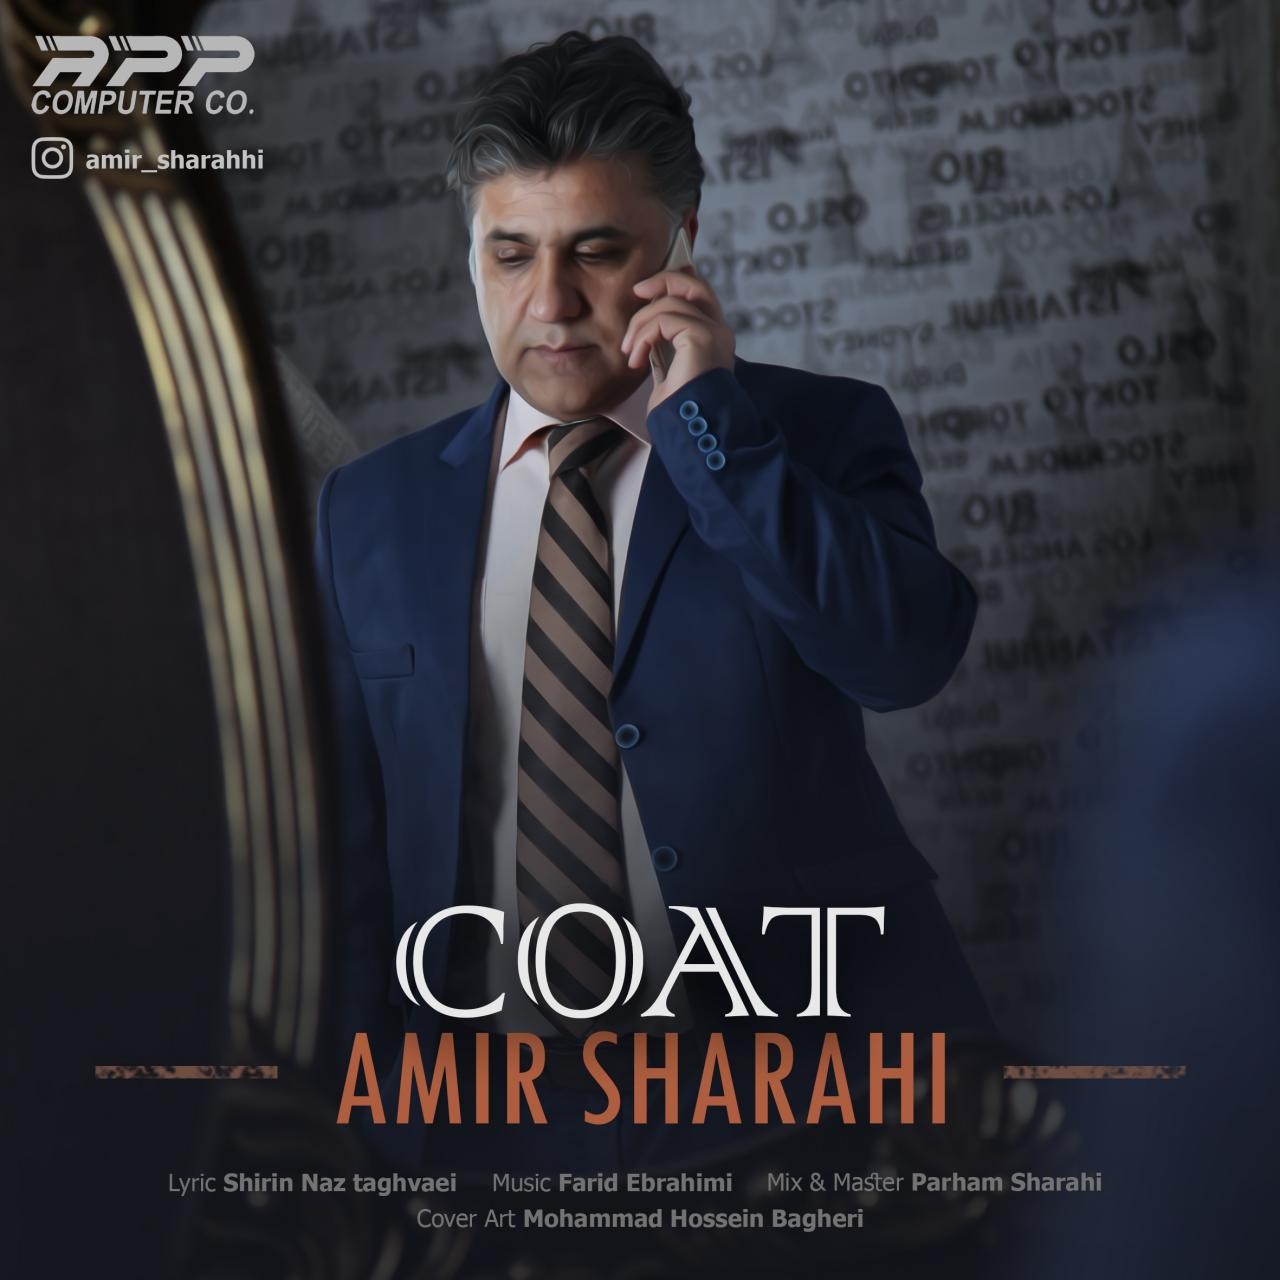  دانلود آهنگ جدید امیر شراهی - کت | Download New Music By Amir Sharahi - Coat